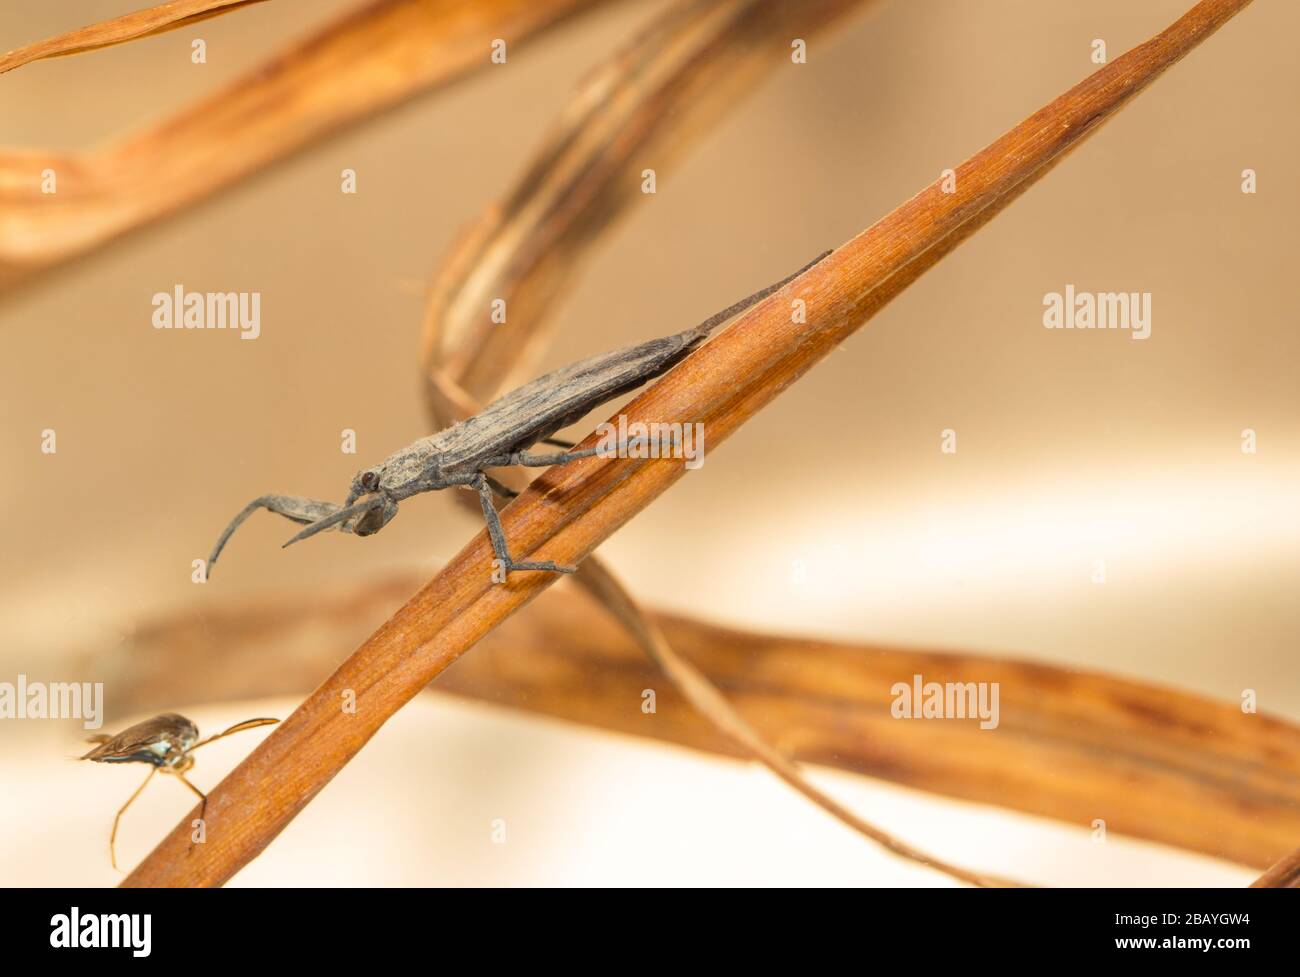 Water scorpion with prey (Nepa cinerea) Stock Photo